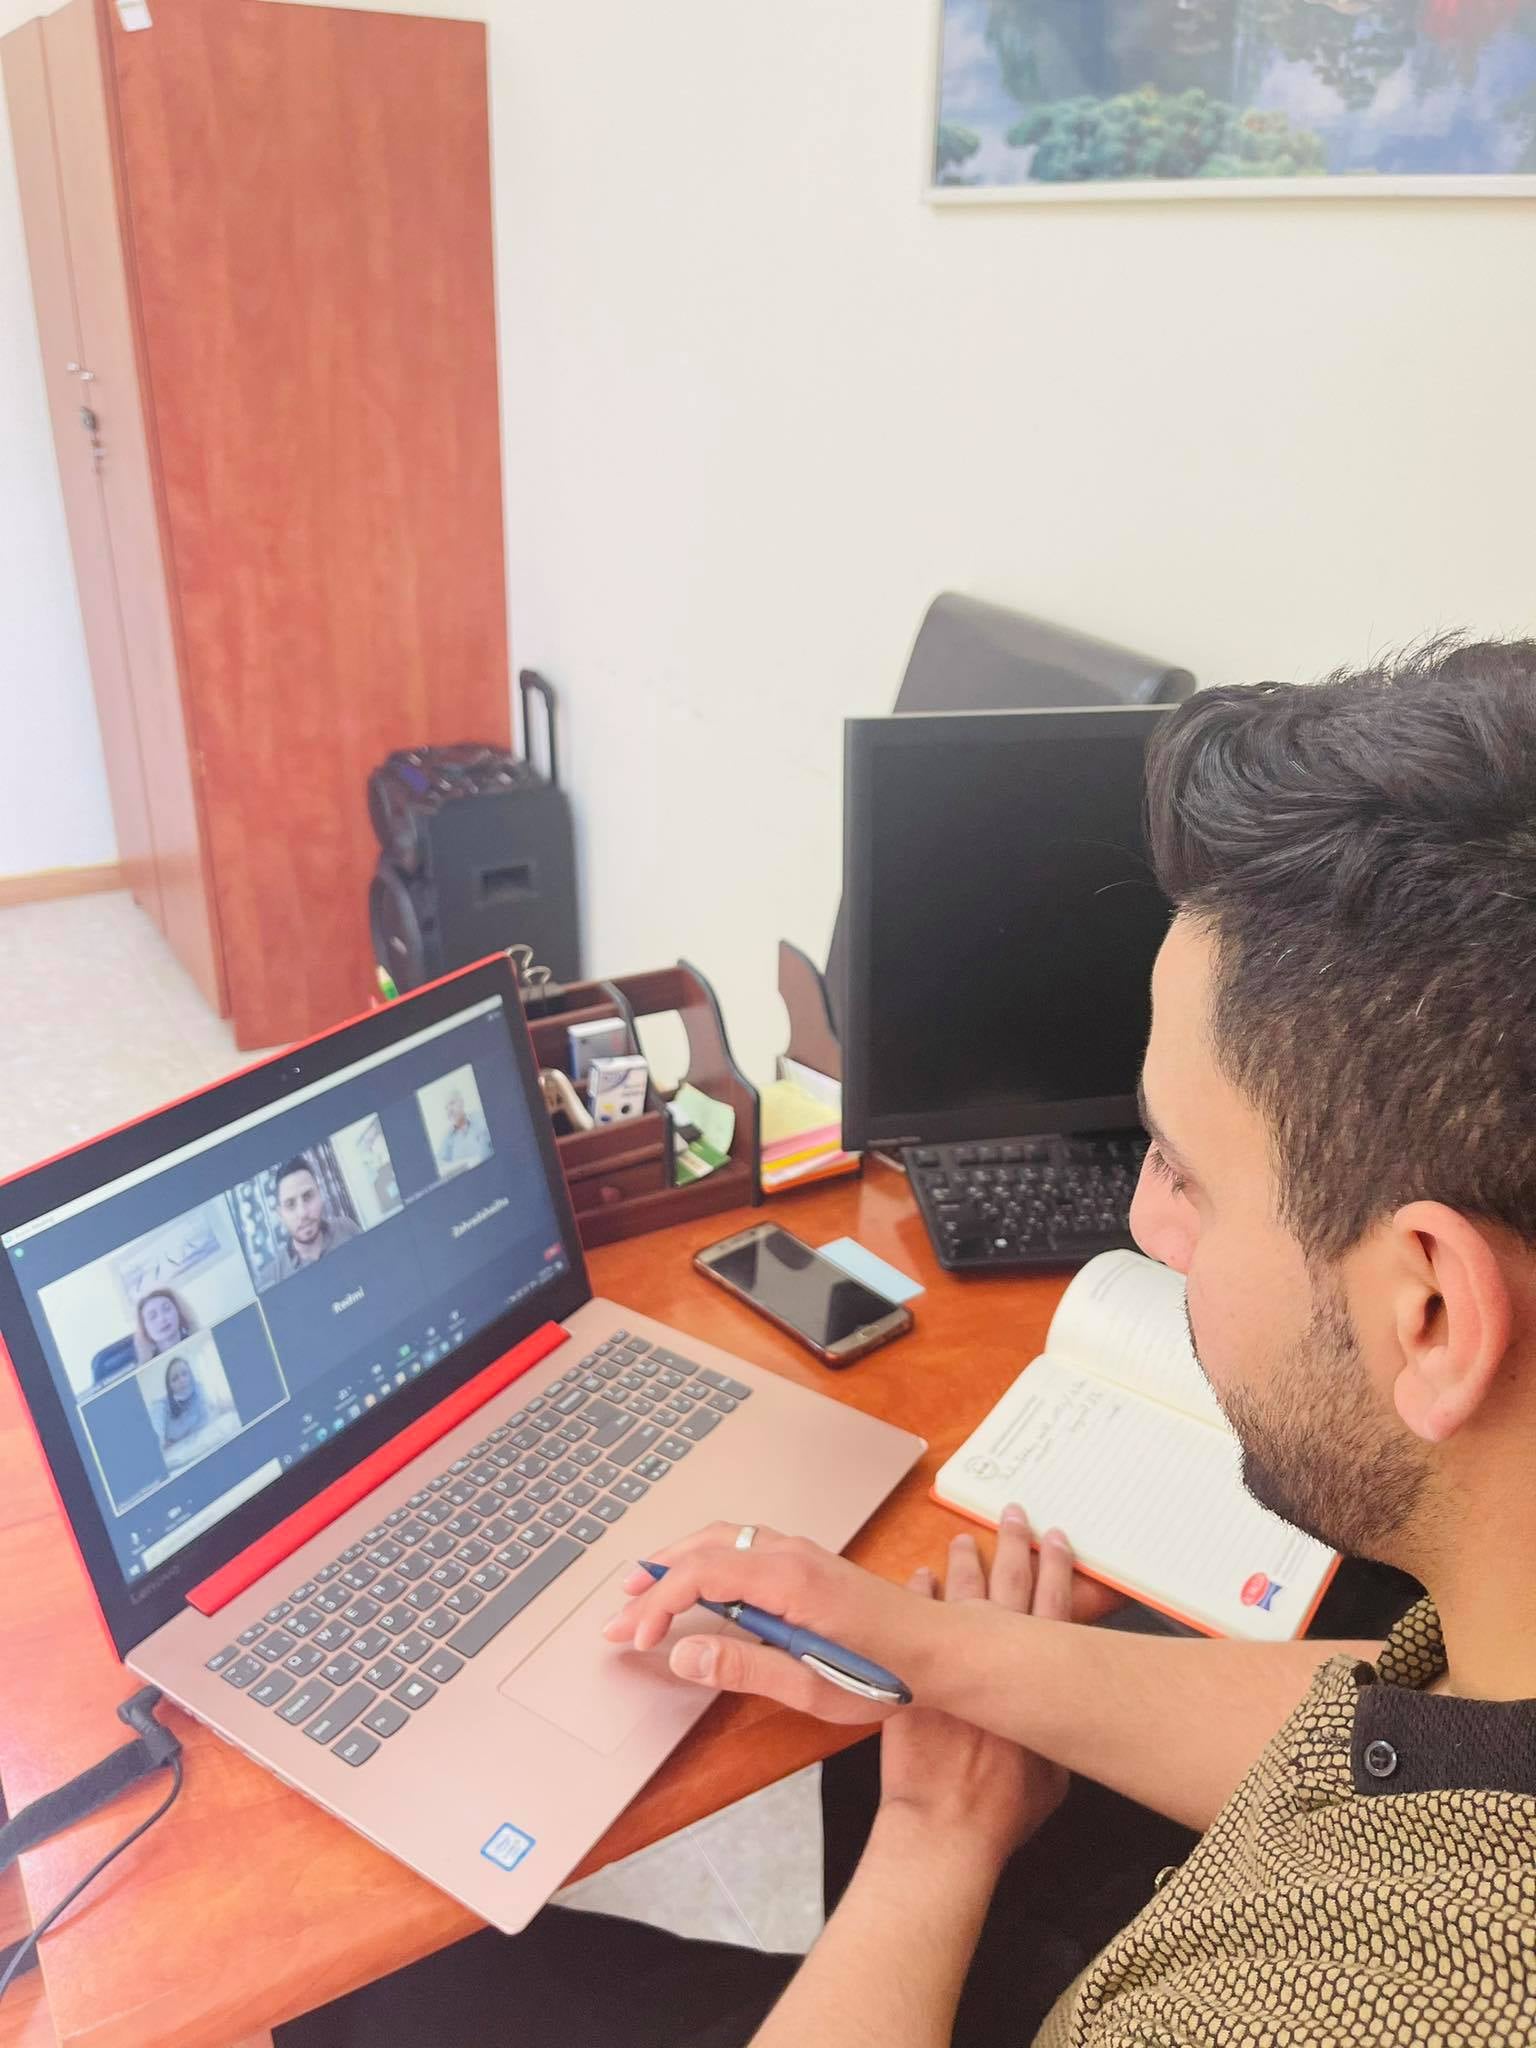  Online digital training for Atara municipality employees